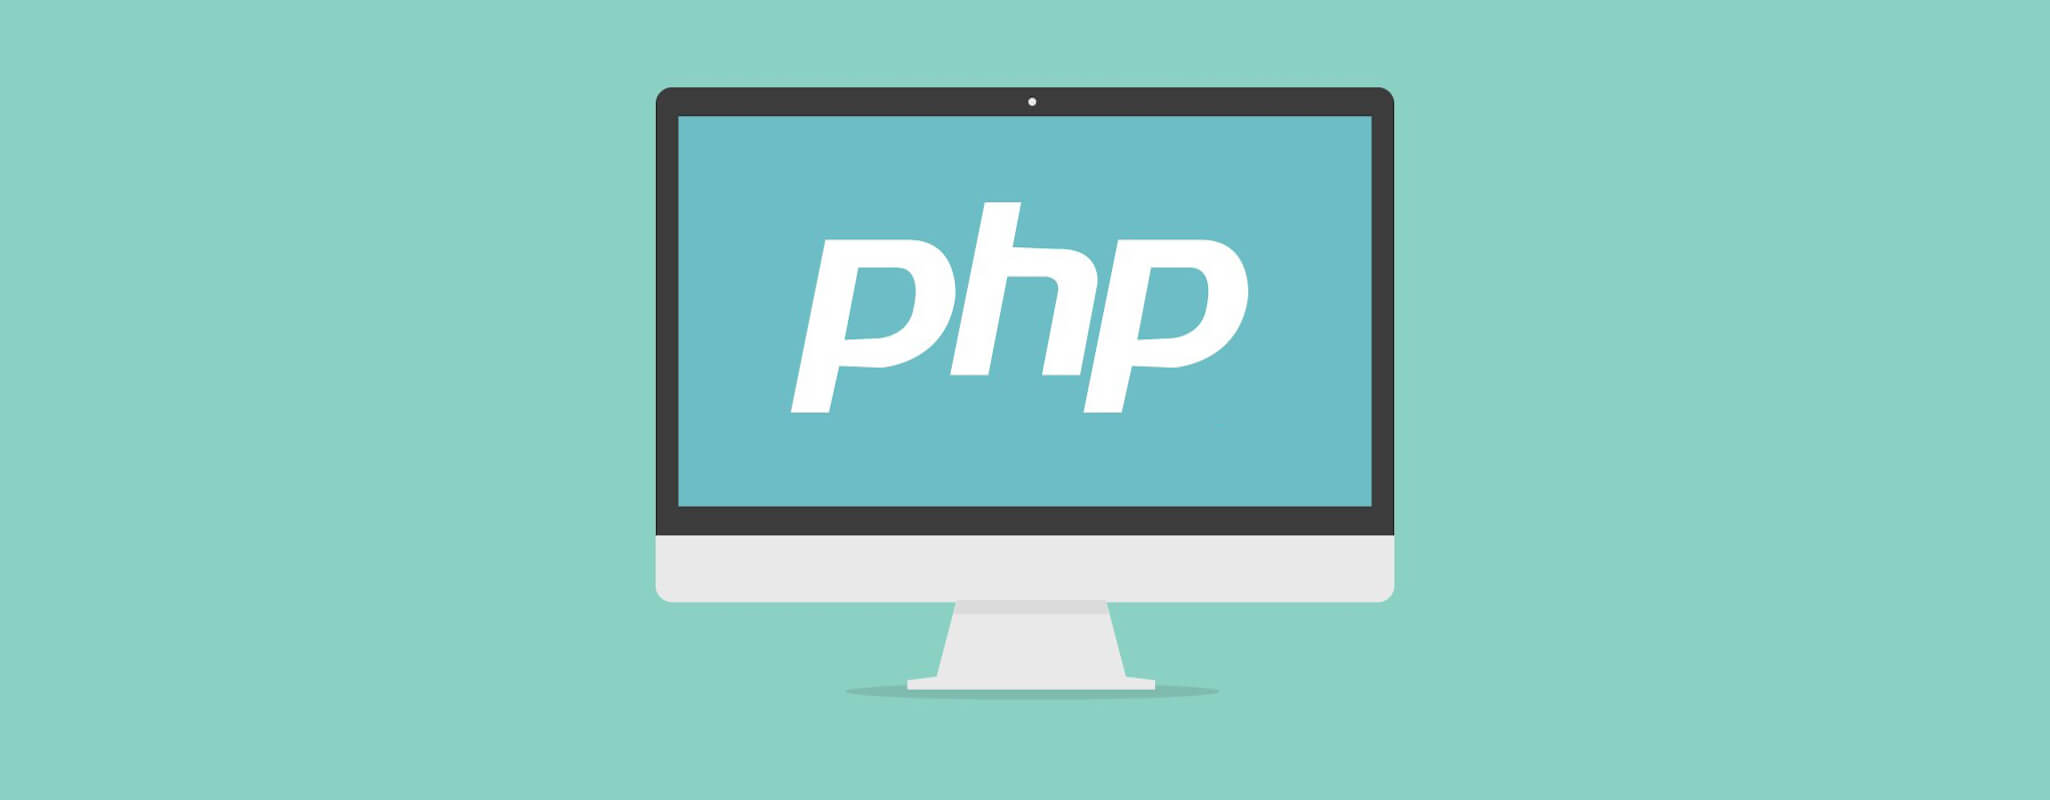 Running PHP 4 & 5 on the Same Machine (IIS)